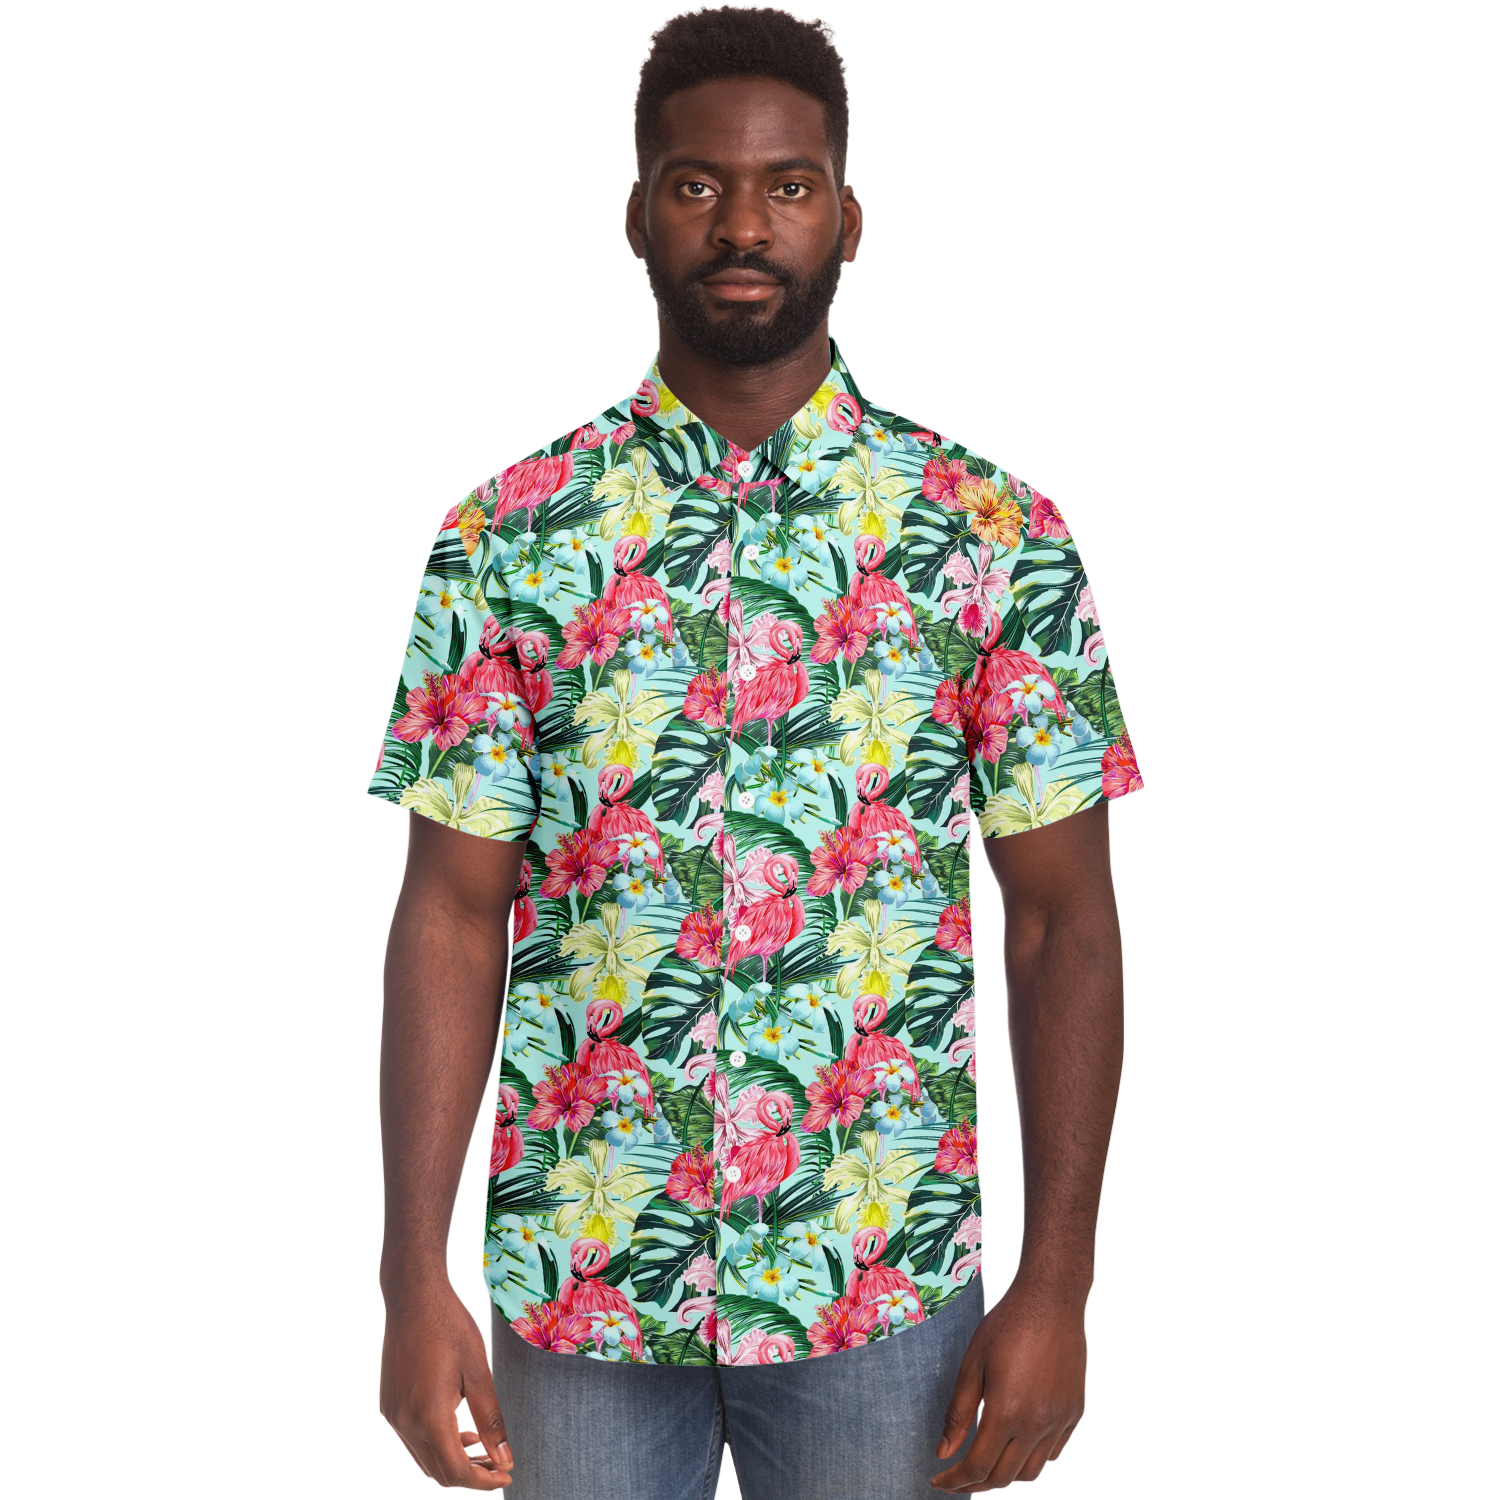 Flamingo Island Shirt